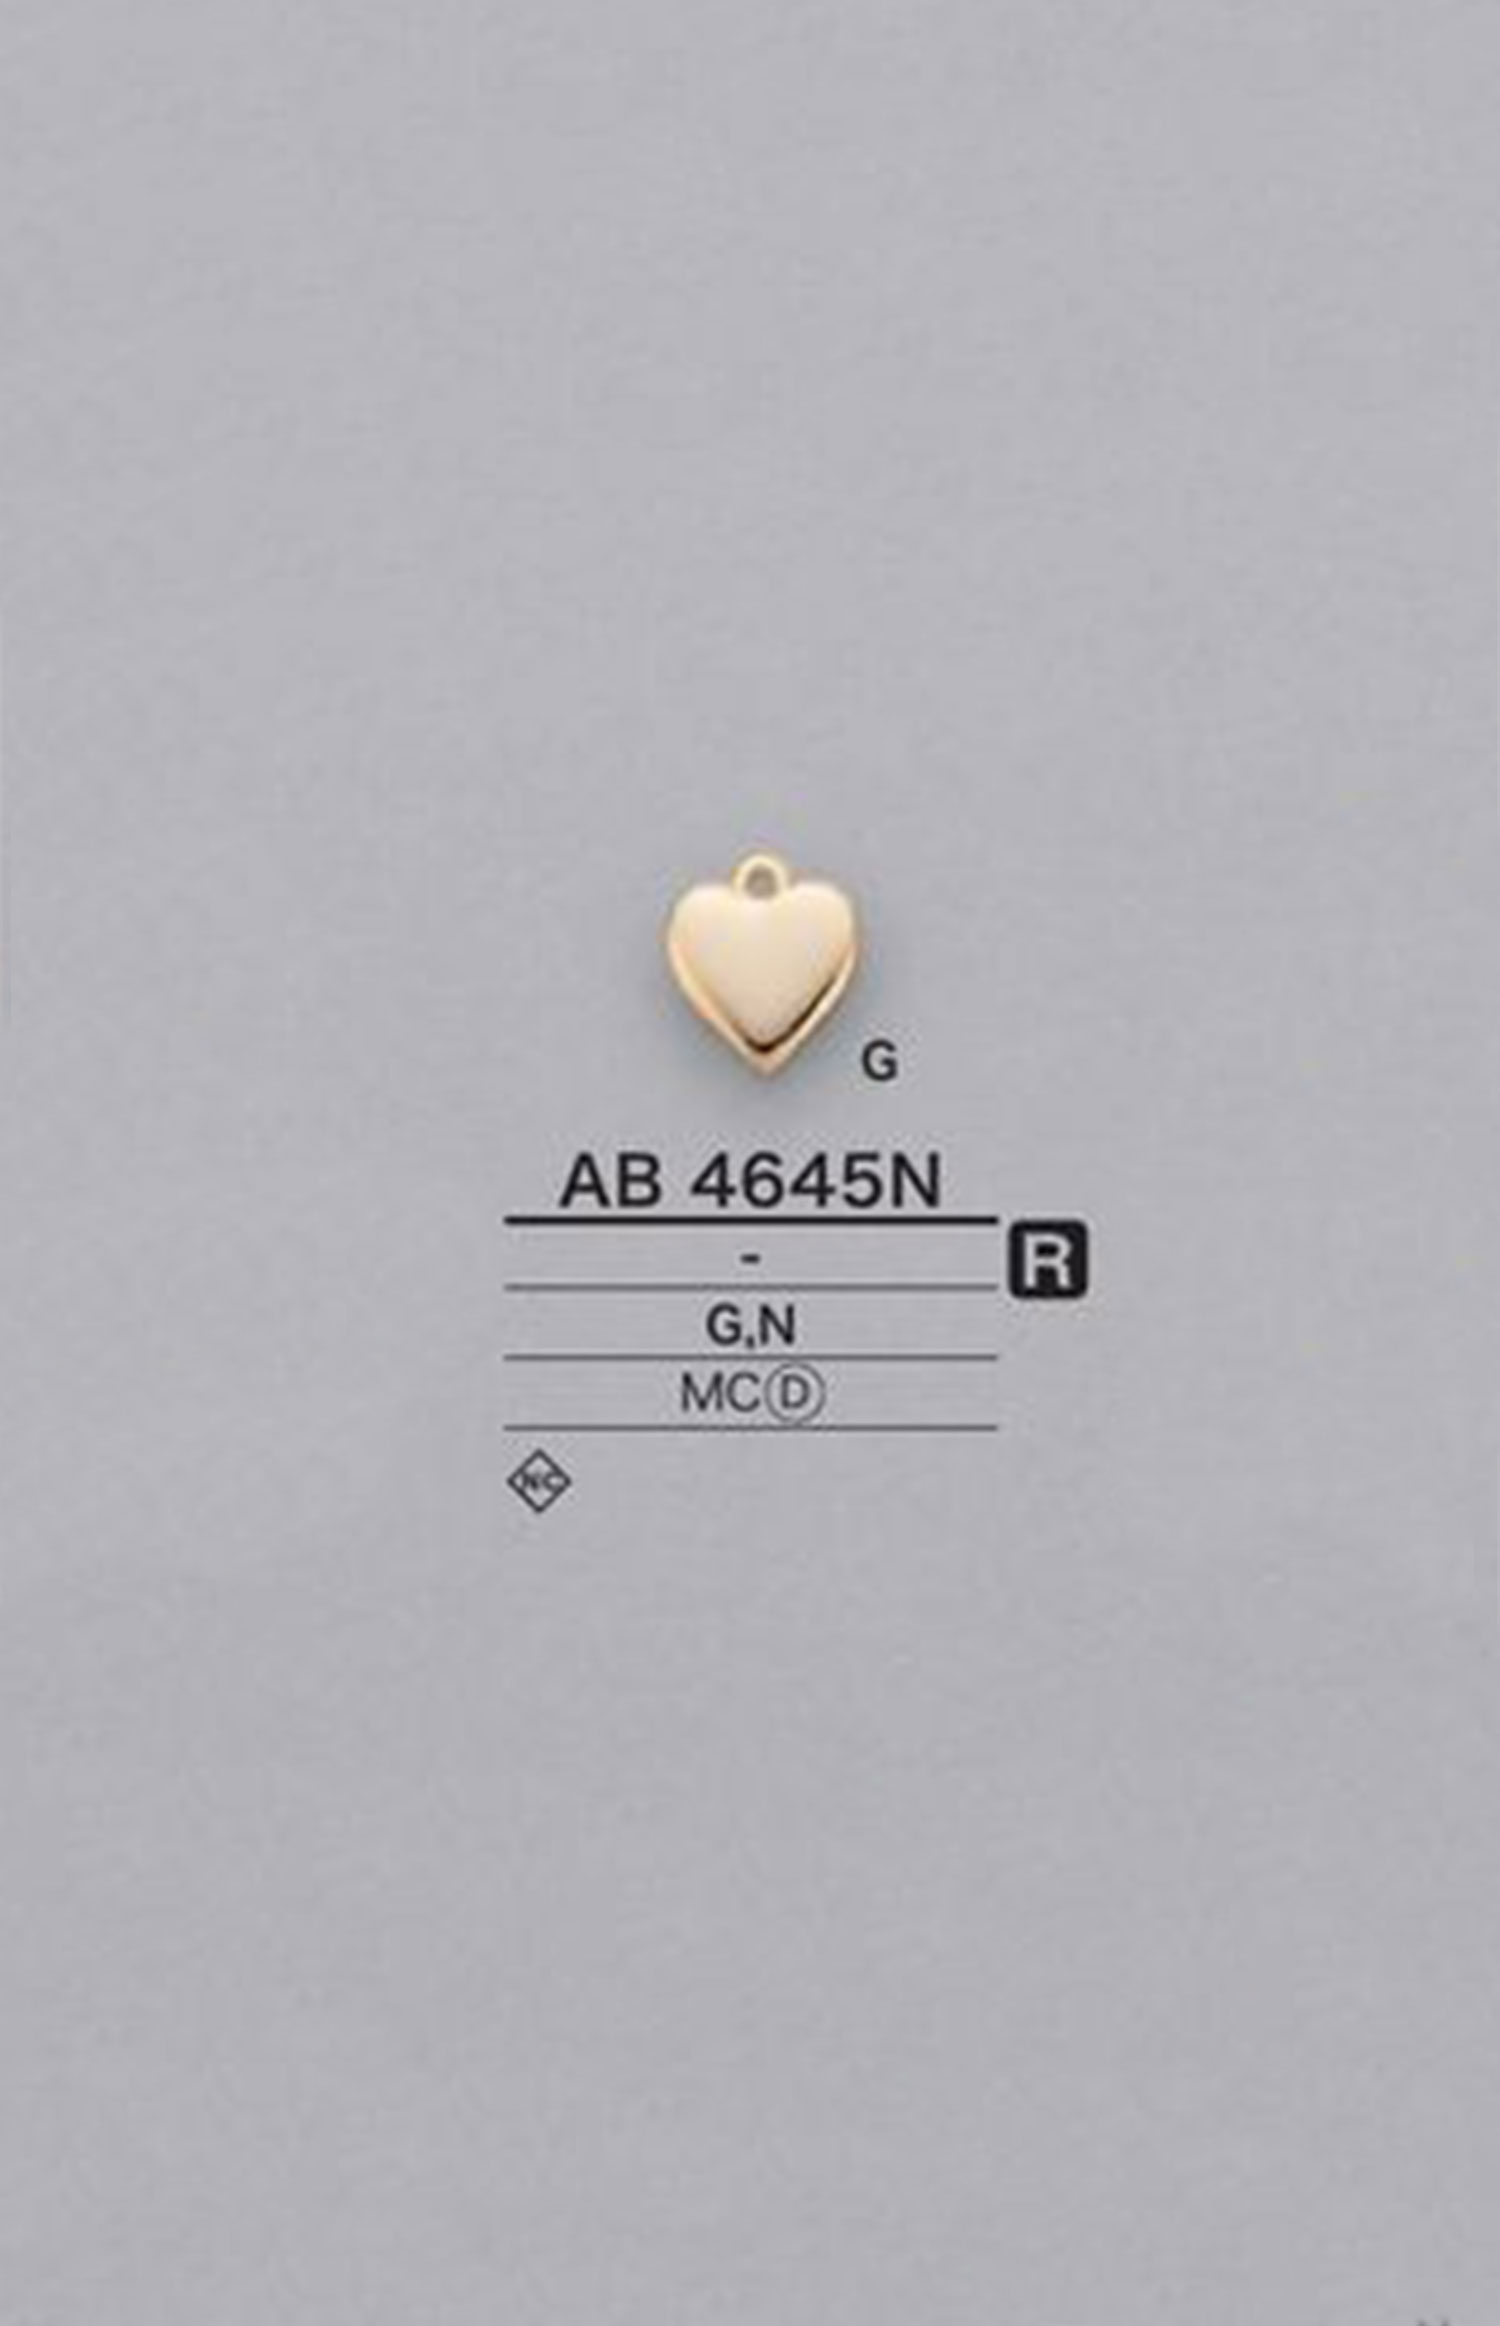 AB4645N ハート型 モチーフパーツ[雑貨その他] アイリス